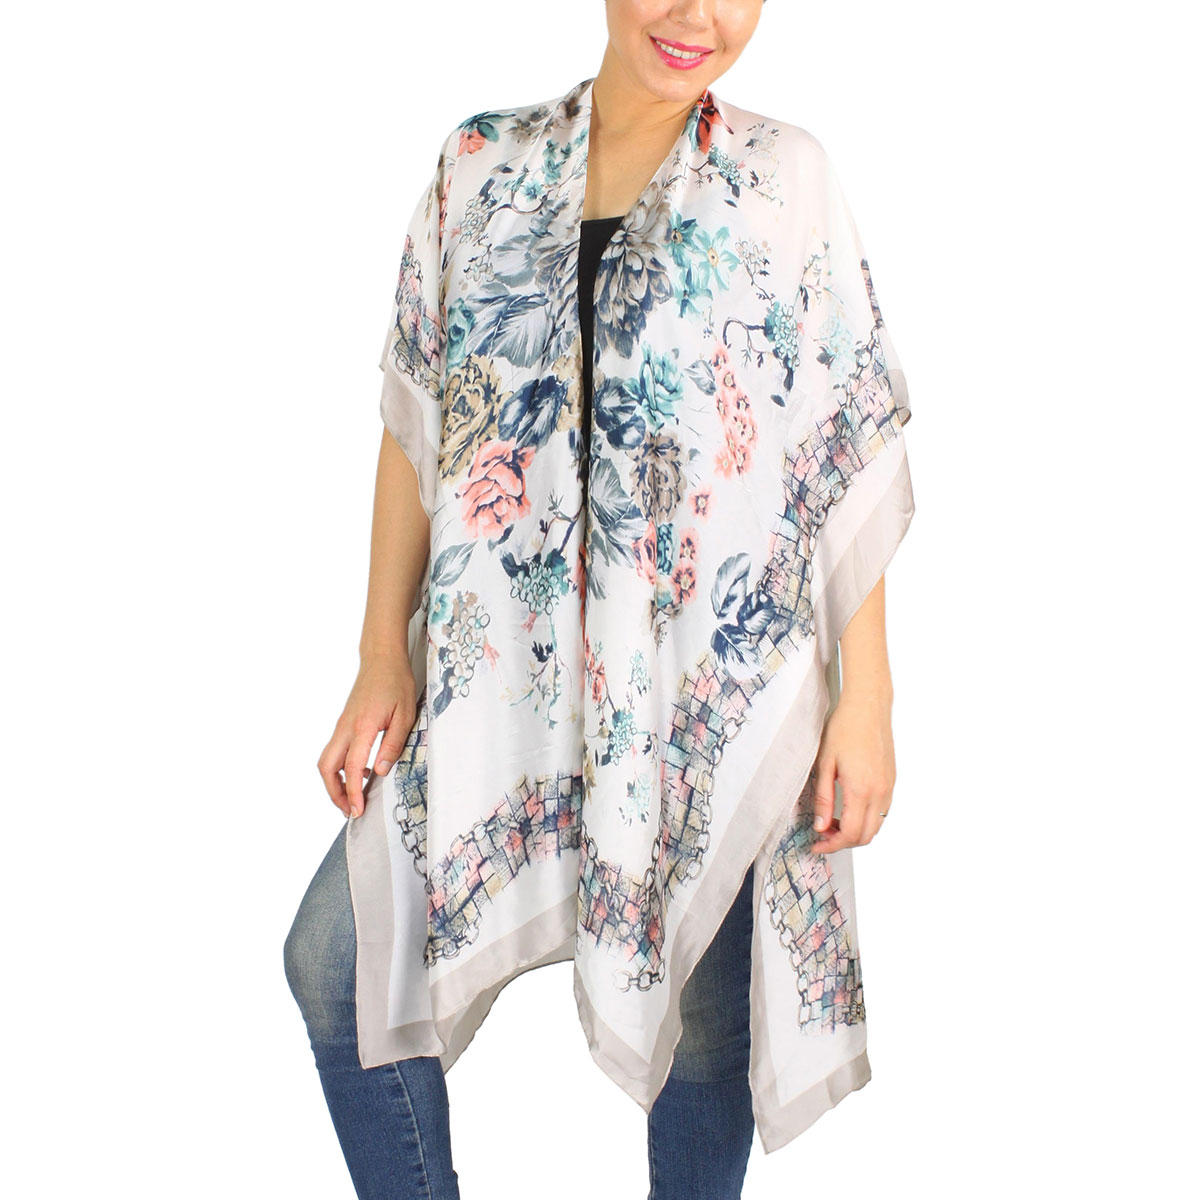 Light Satin Kimono - 4237/9287 9286 - Black Border<br>
Flower Print Kimono - 